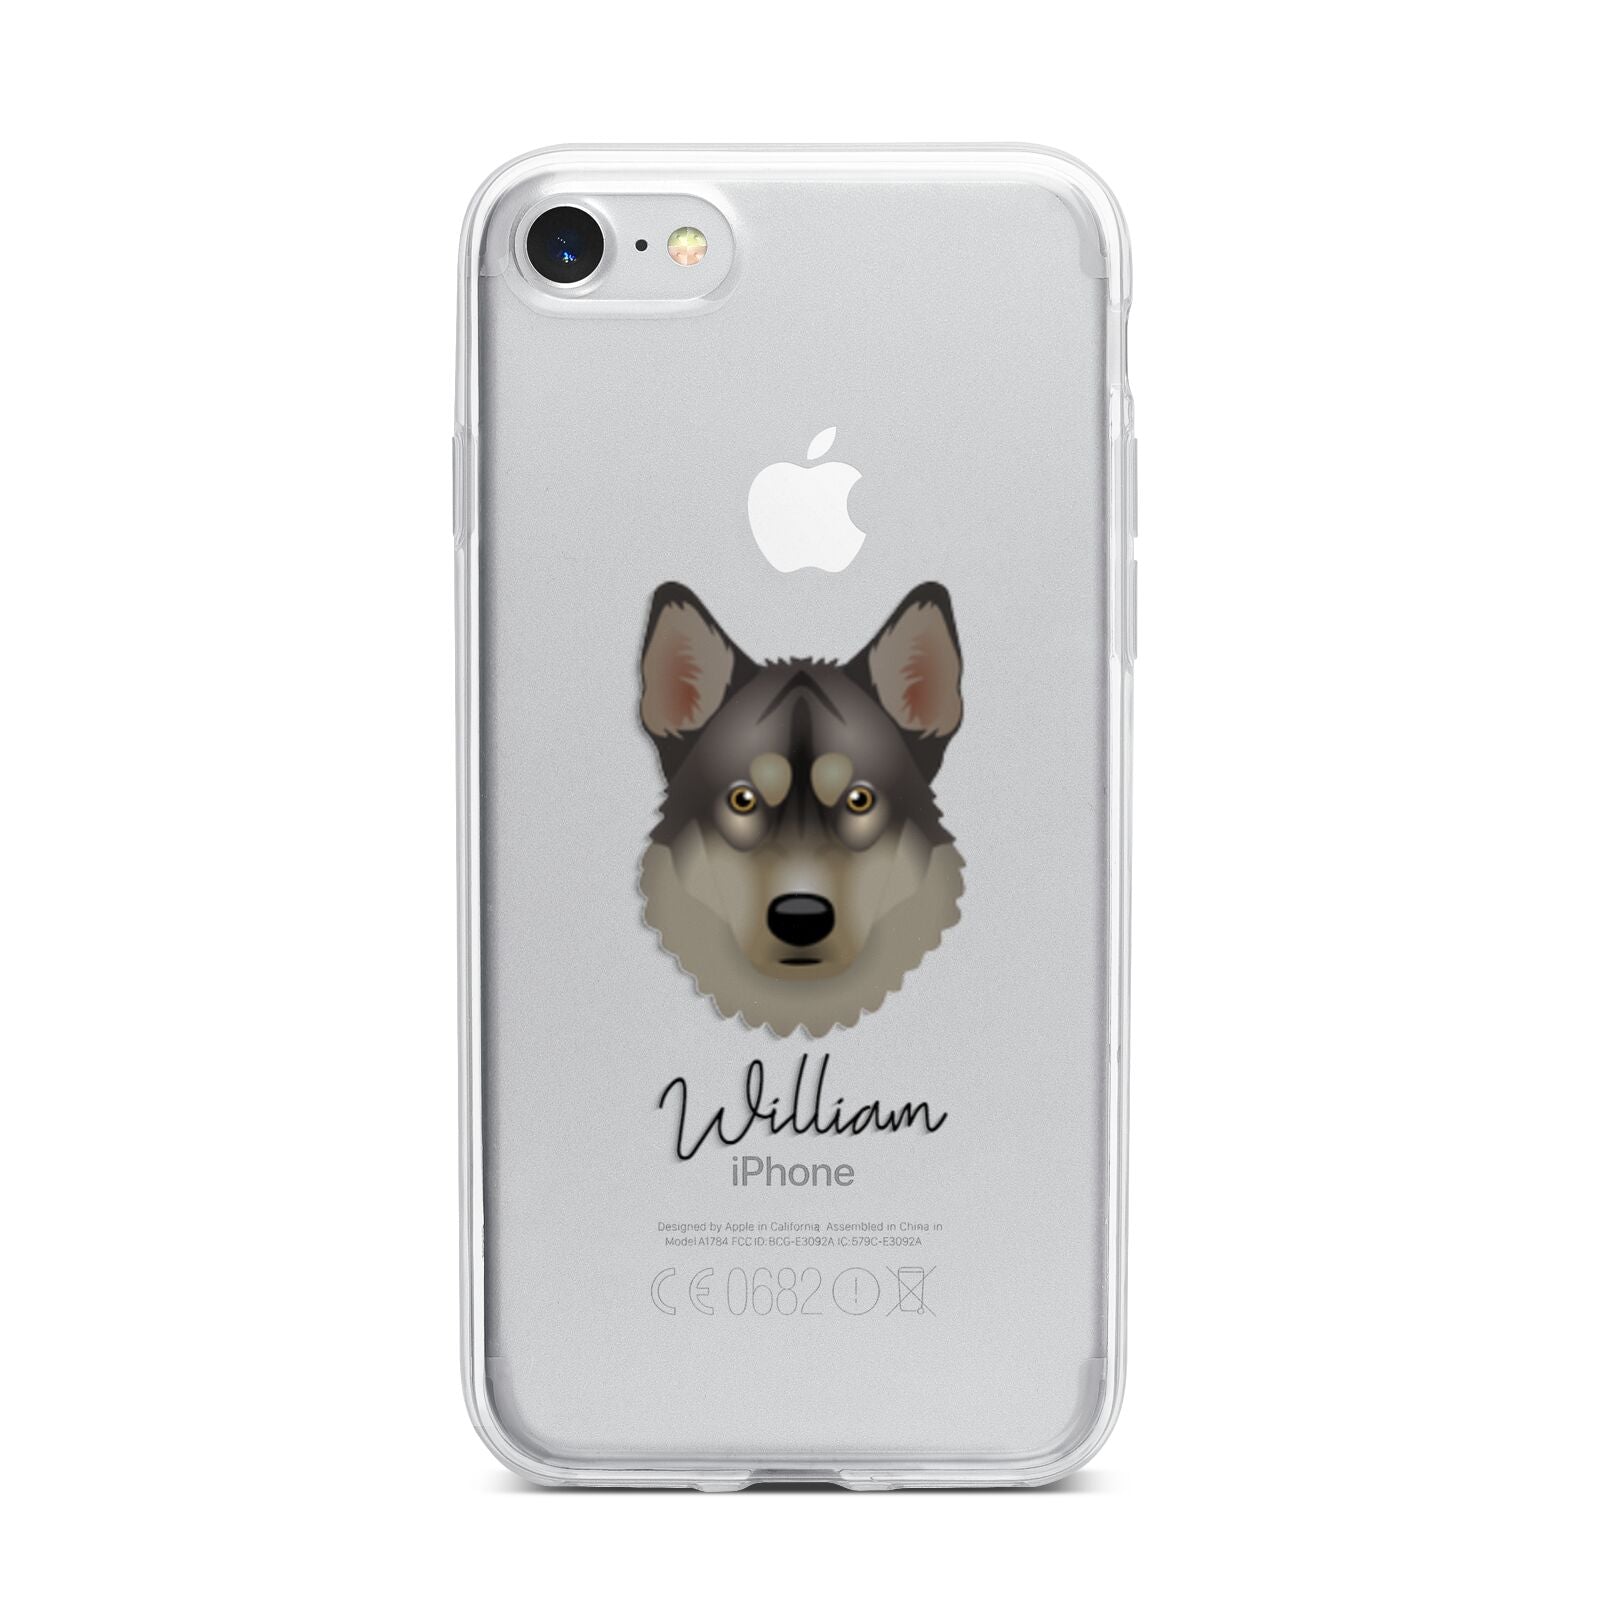 Tamaskan Personalised iPhone 7 Bumper Case on Silver iPhone